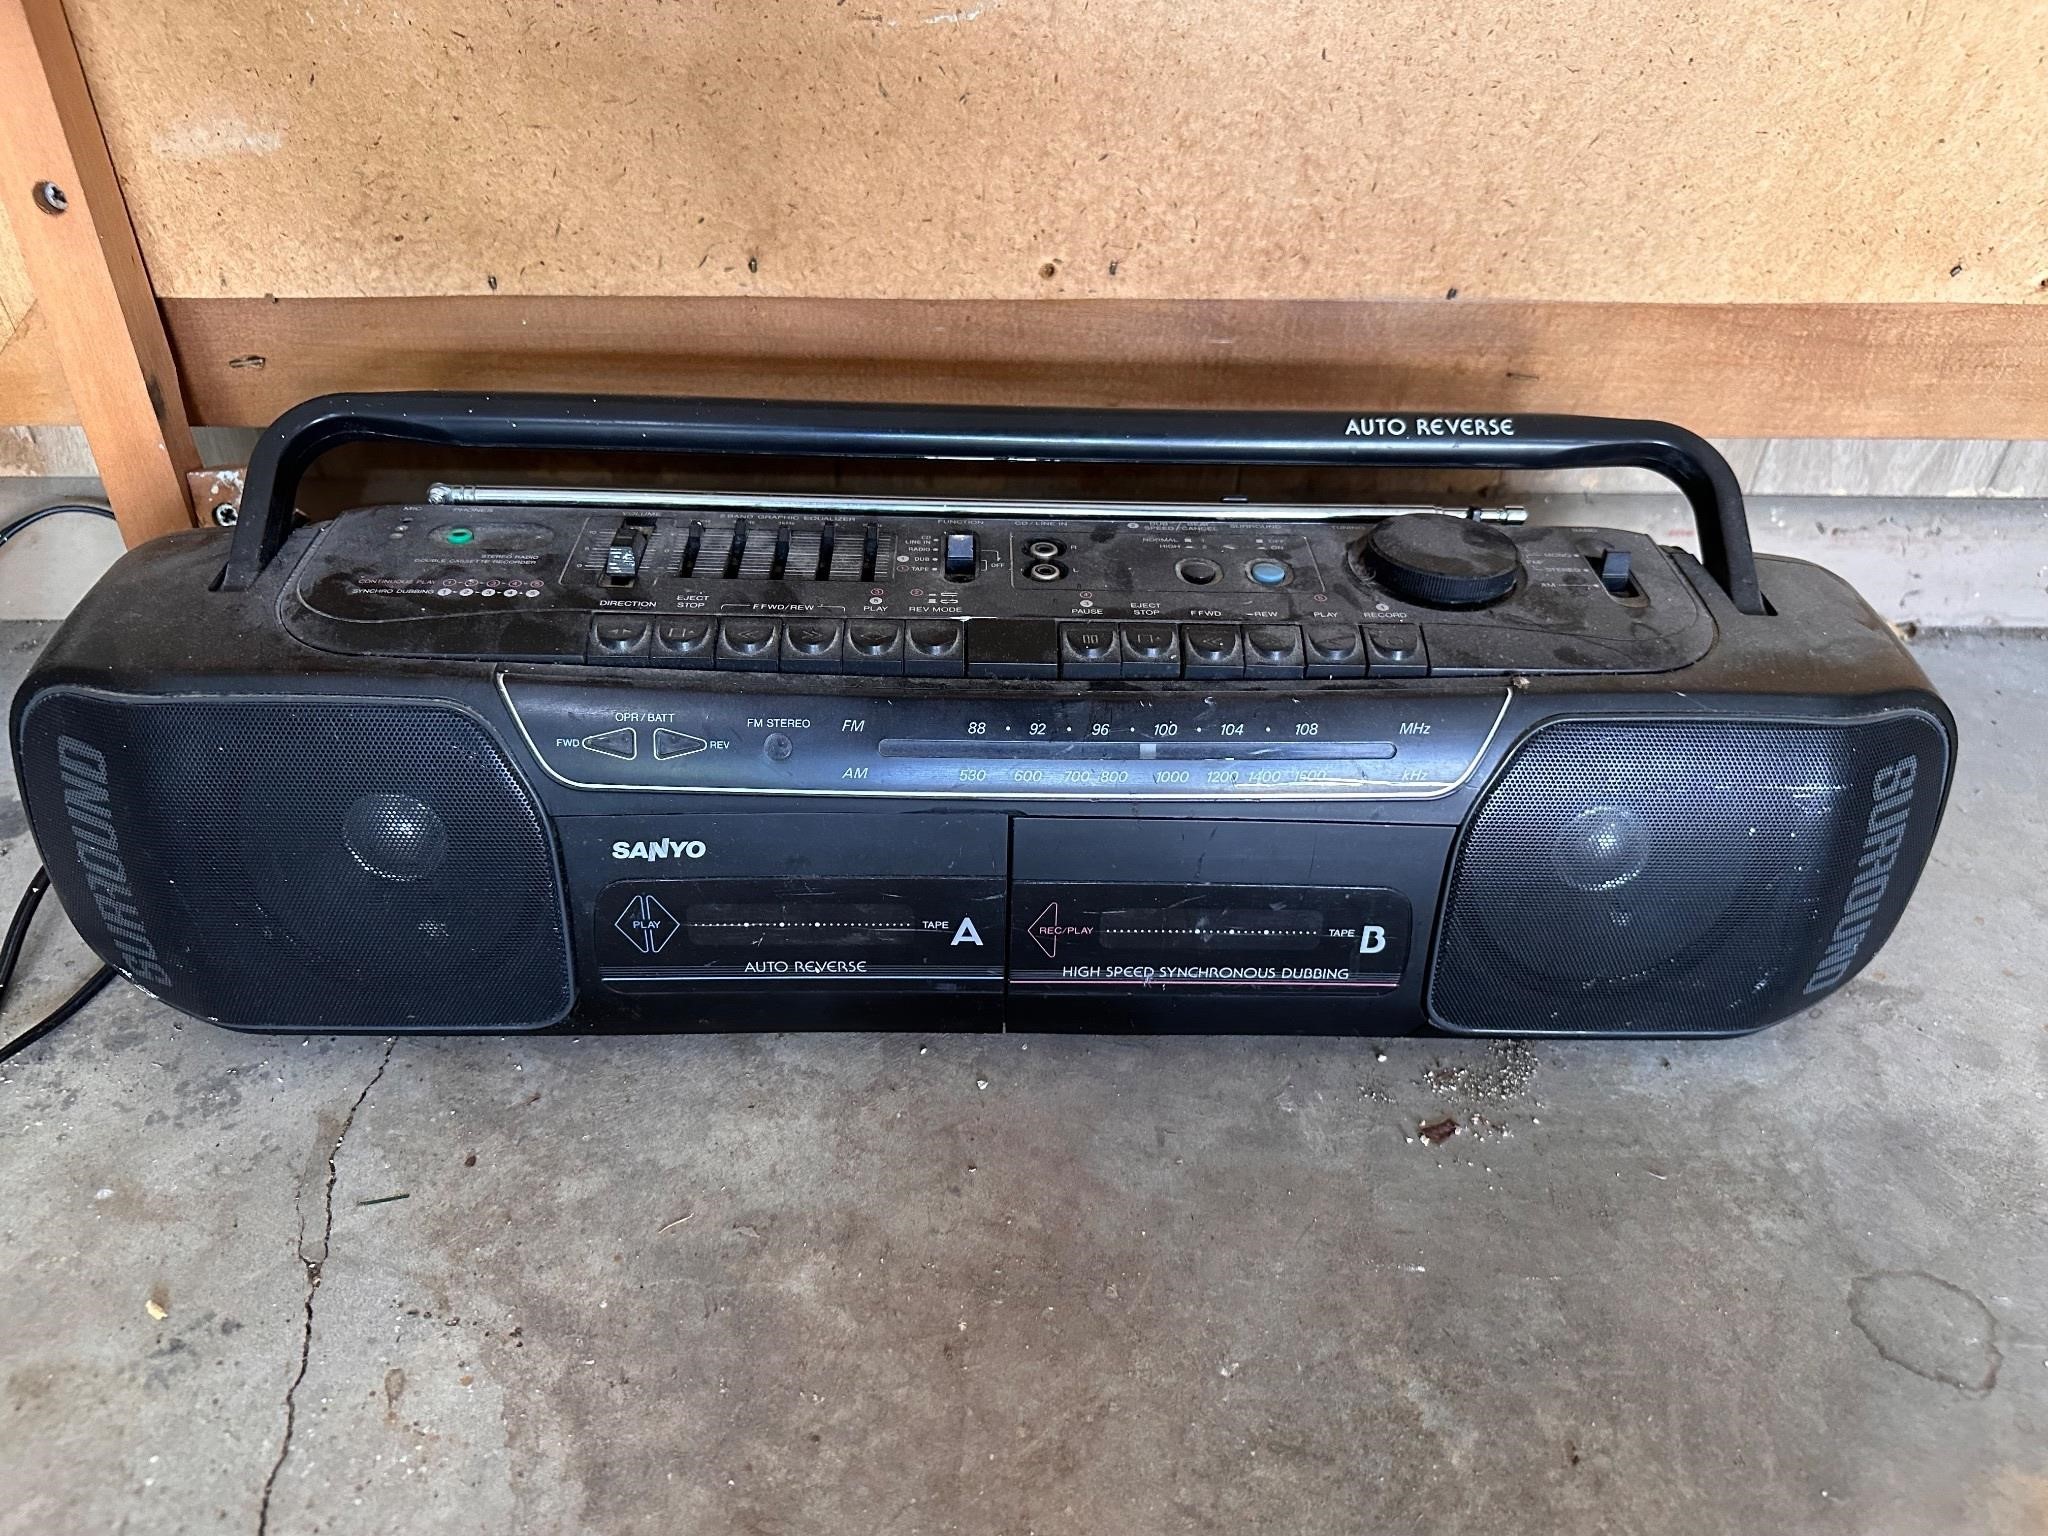 Sanyo cassette player radio